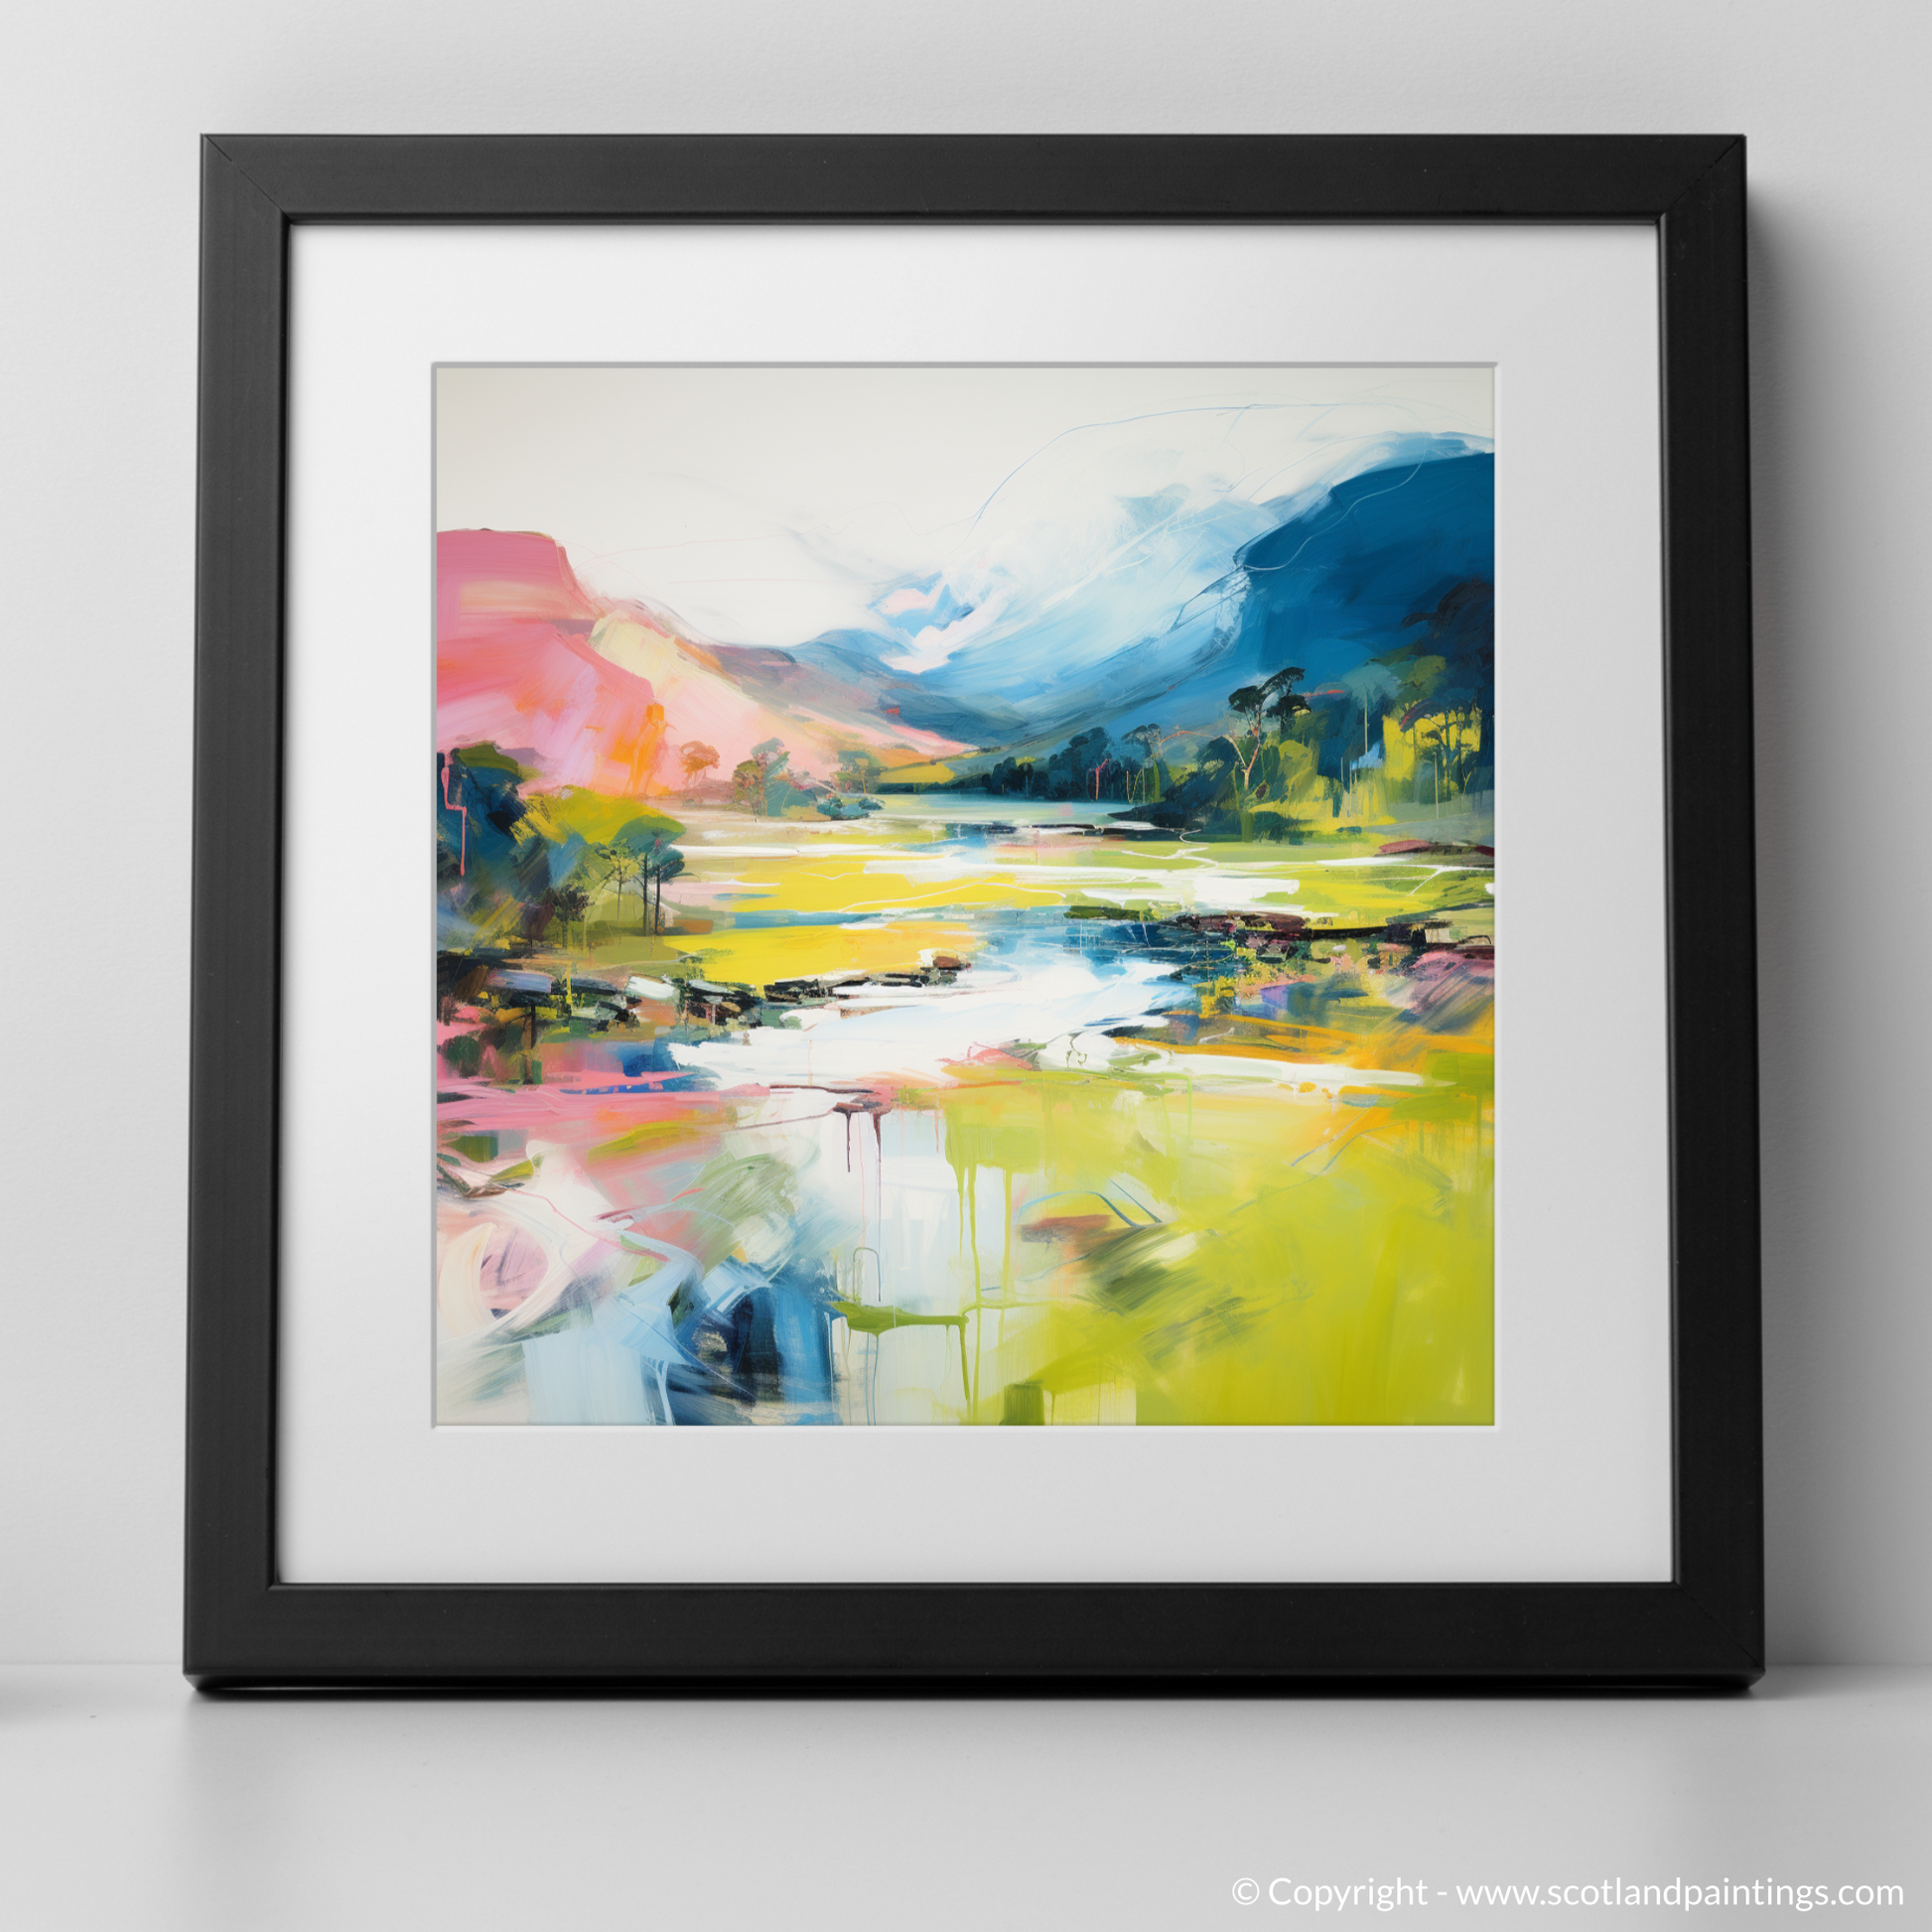 Art Print of River Spean, Highlands in summer with a black frame